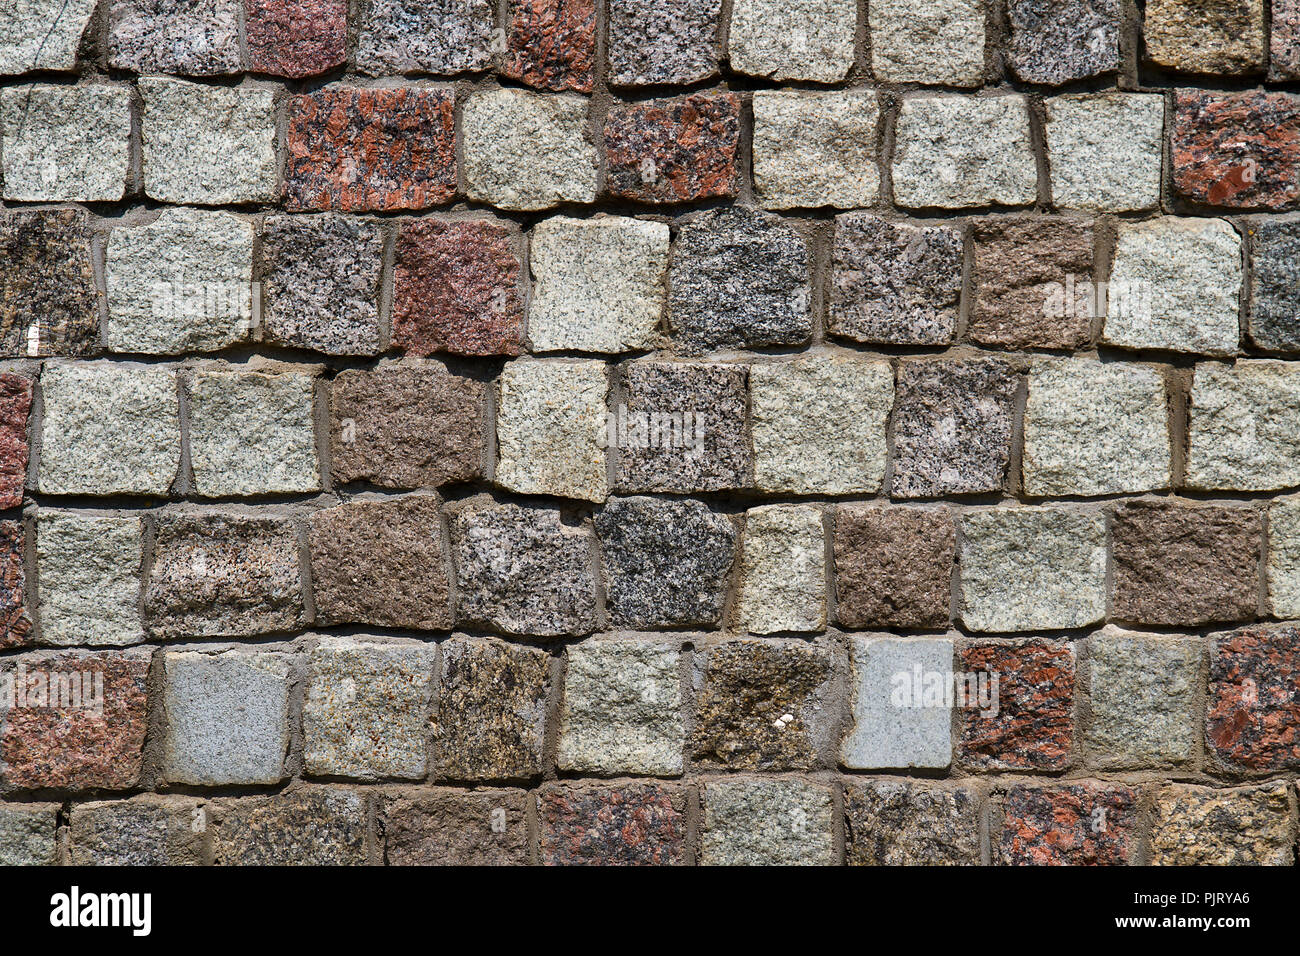 Granite brickwall texture pattern close-up shot. Background image. Stock Photo